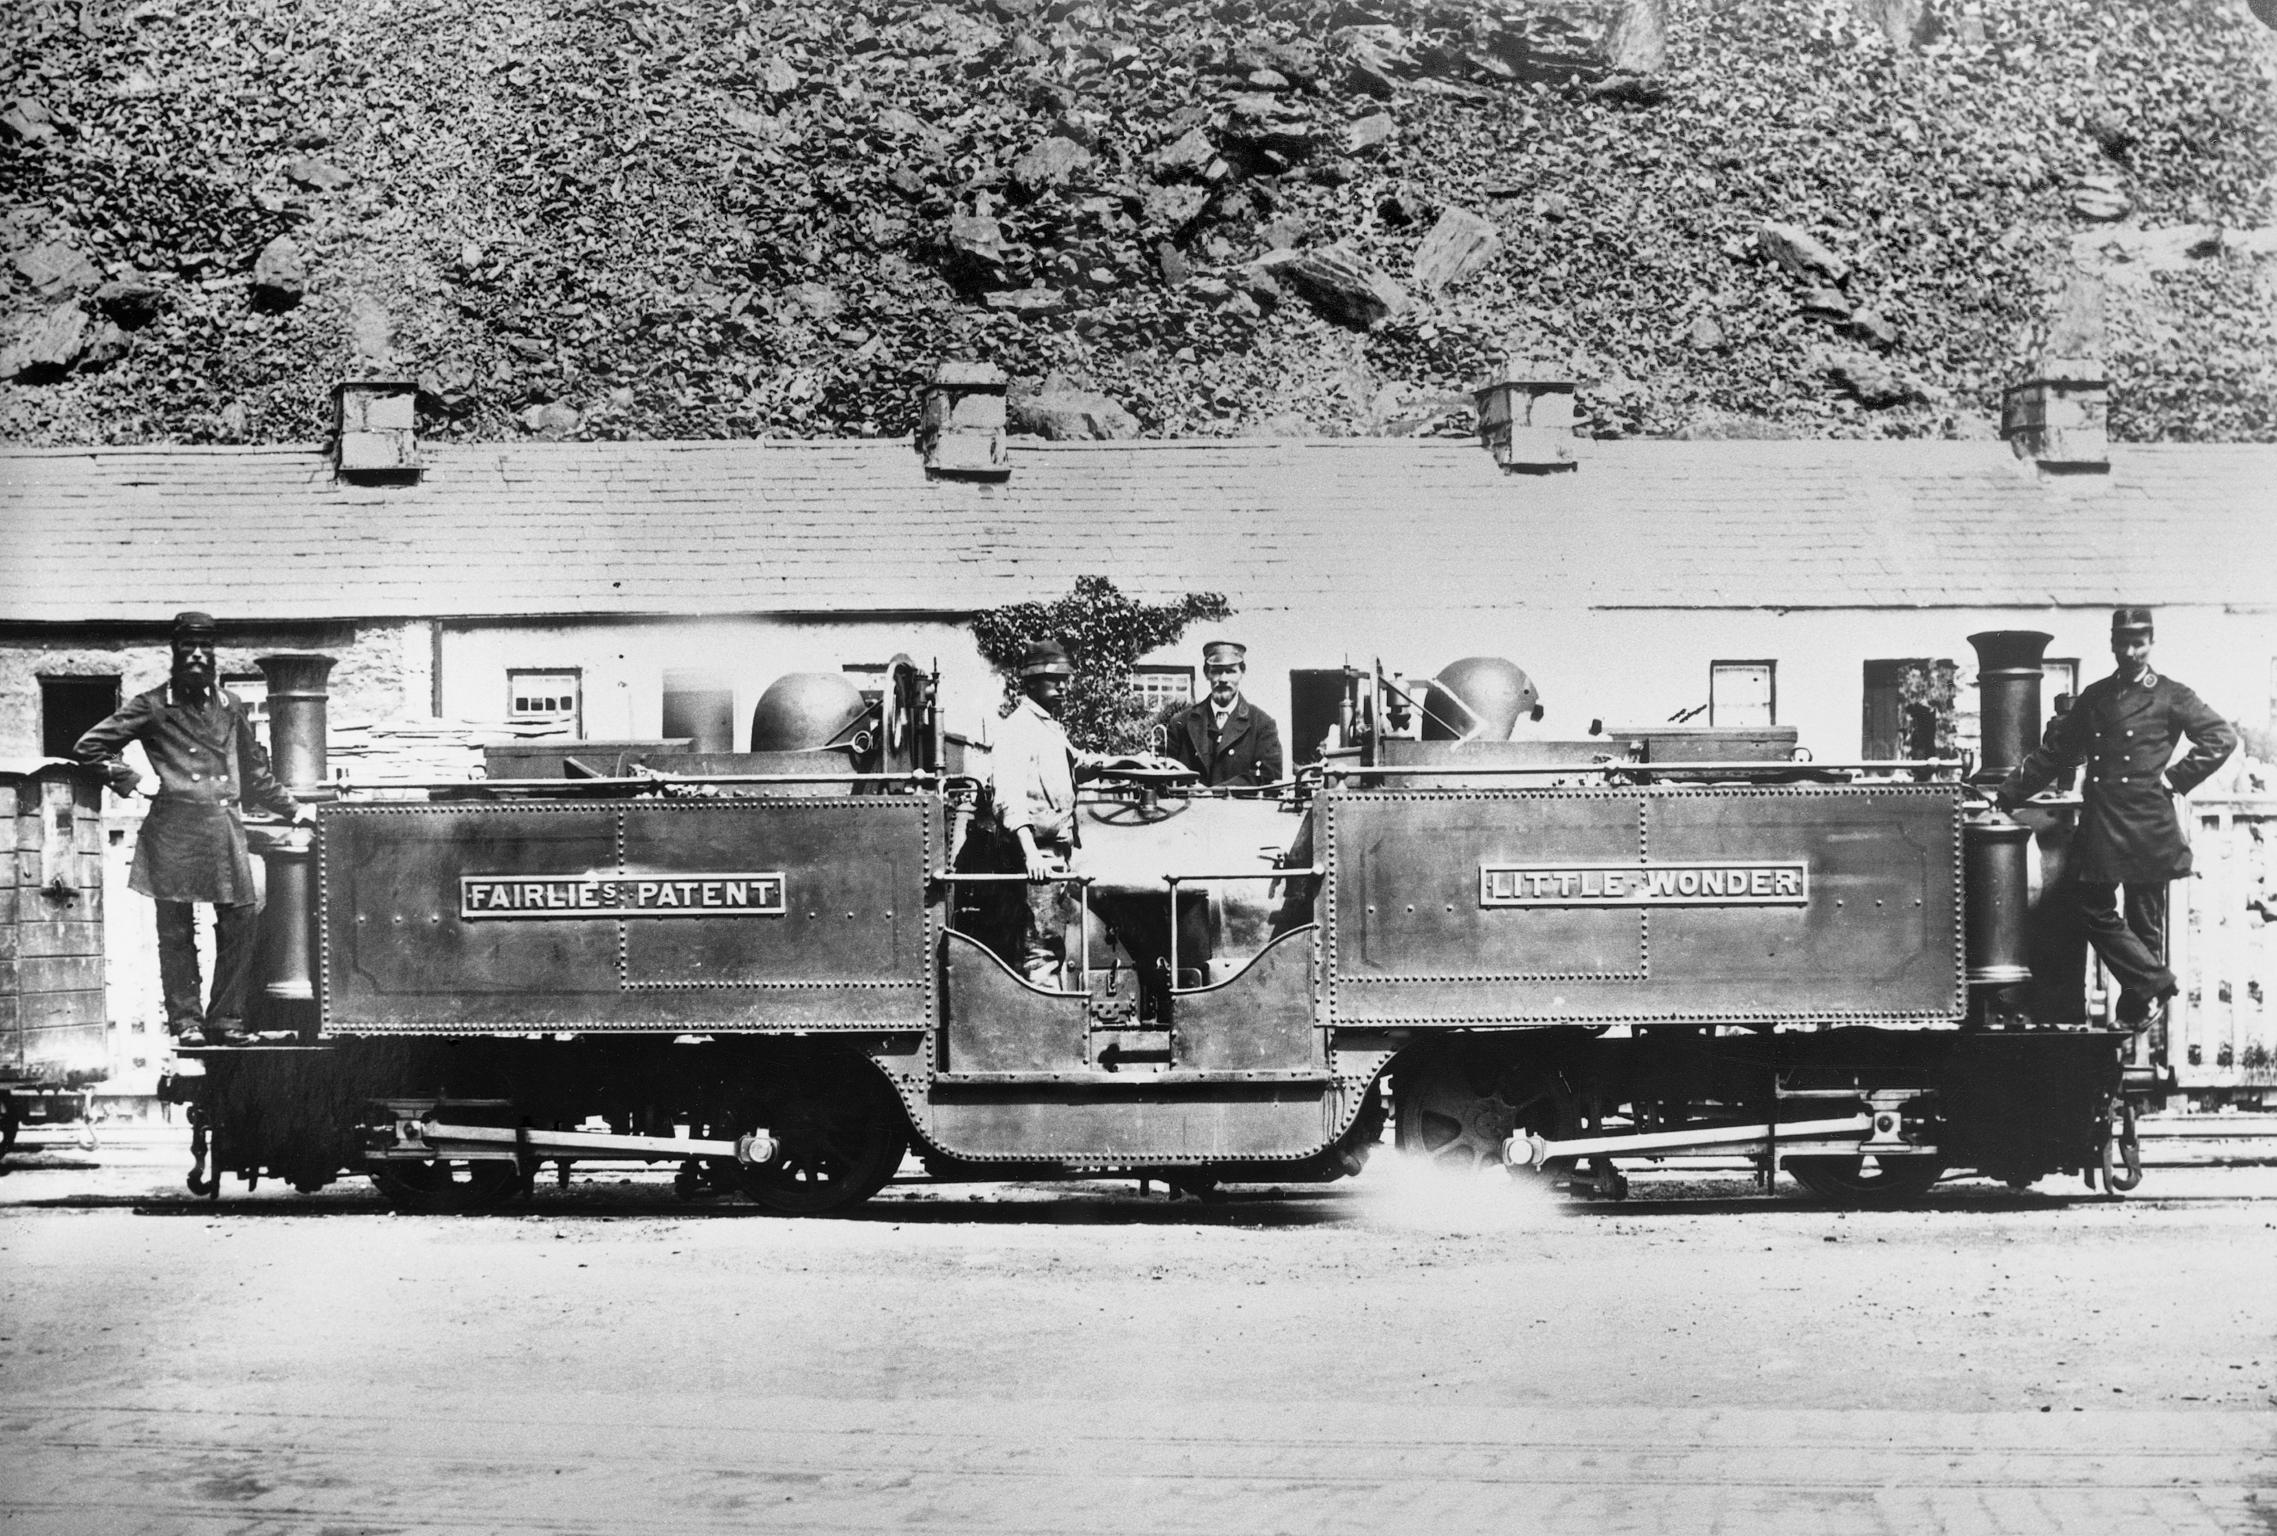 Locomotive LITTLE WONDER, photograph